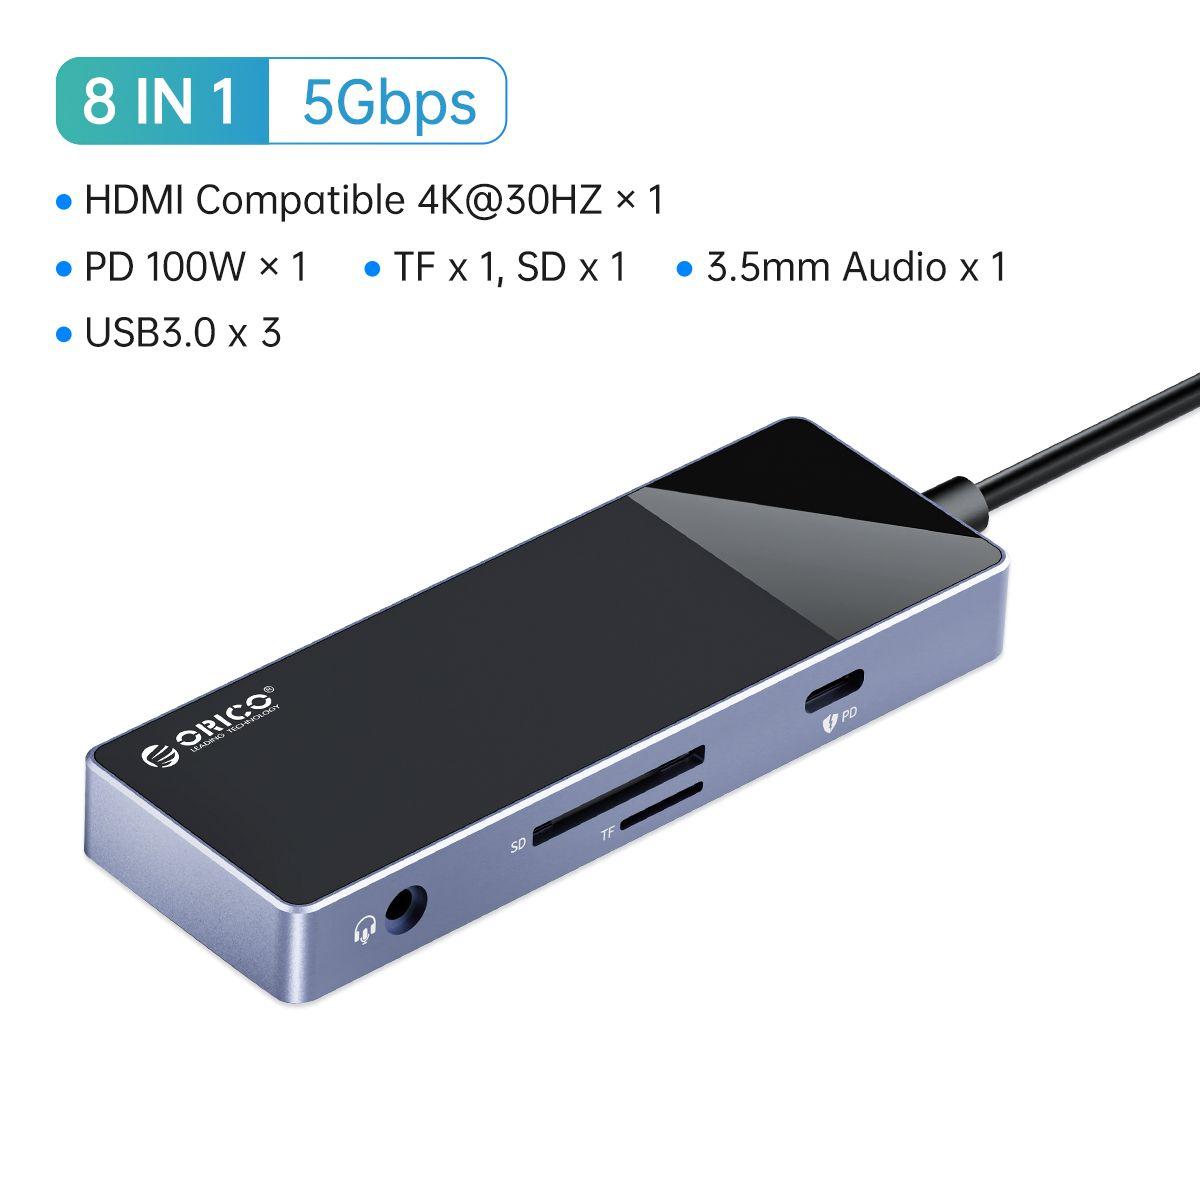 8in1 type-c - Adaptateur Hub USB vers Type C 3.0 séparateur de